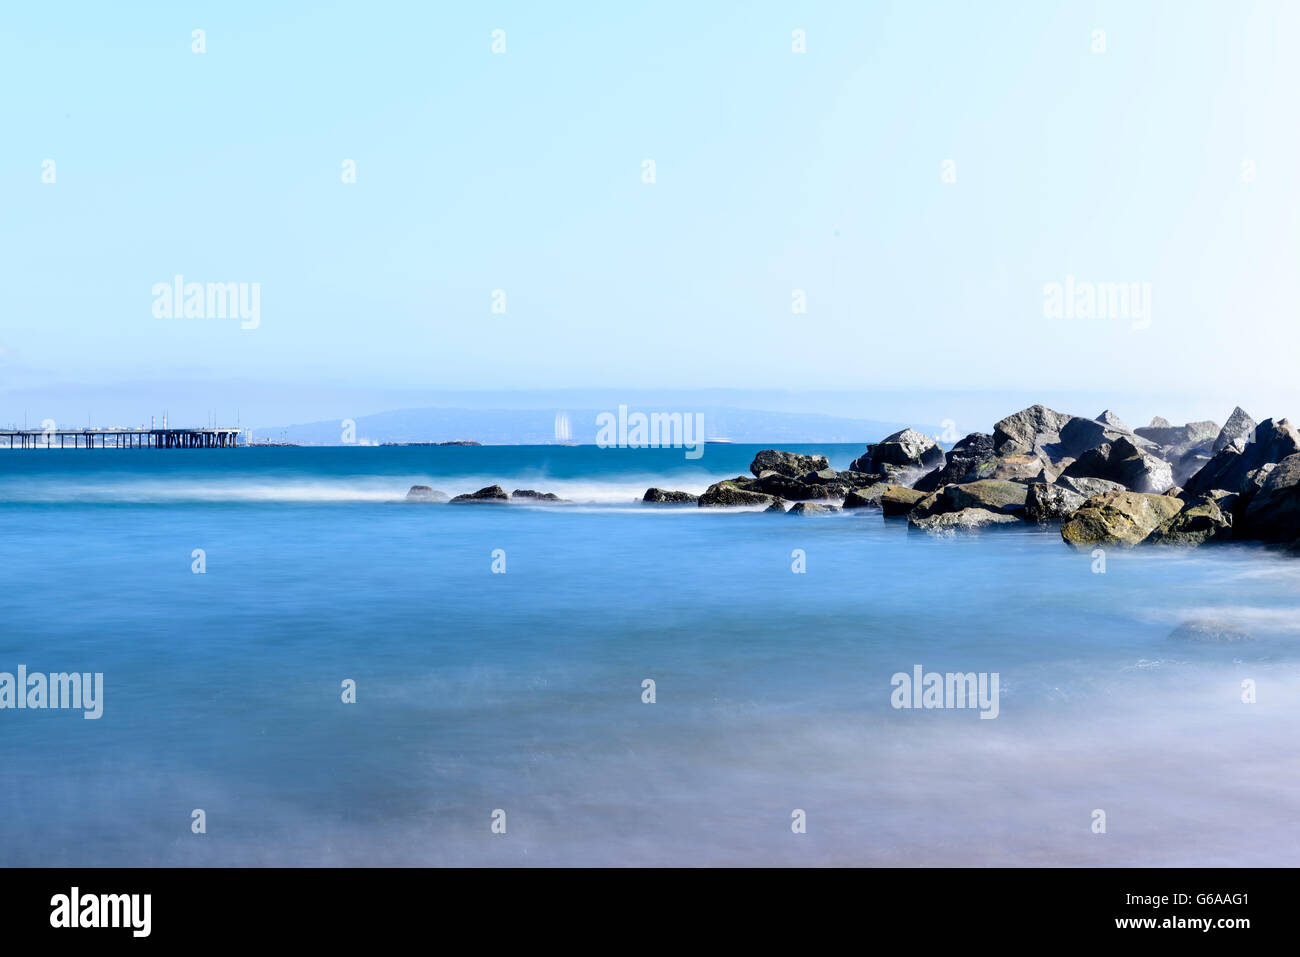 Rocks at the Venice beach in Los Angeles, California USA Stock Photo - Alamy